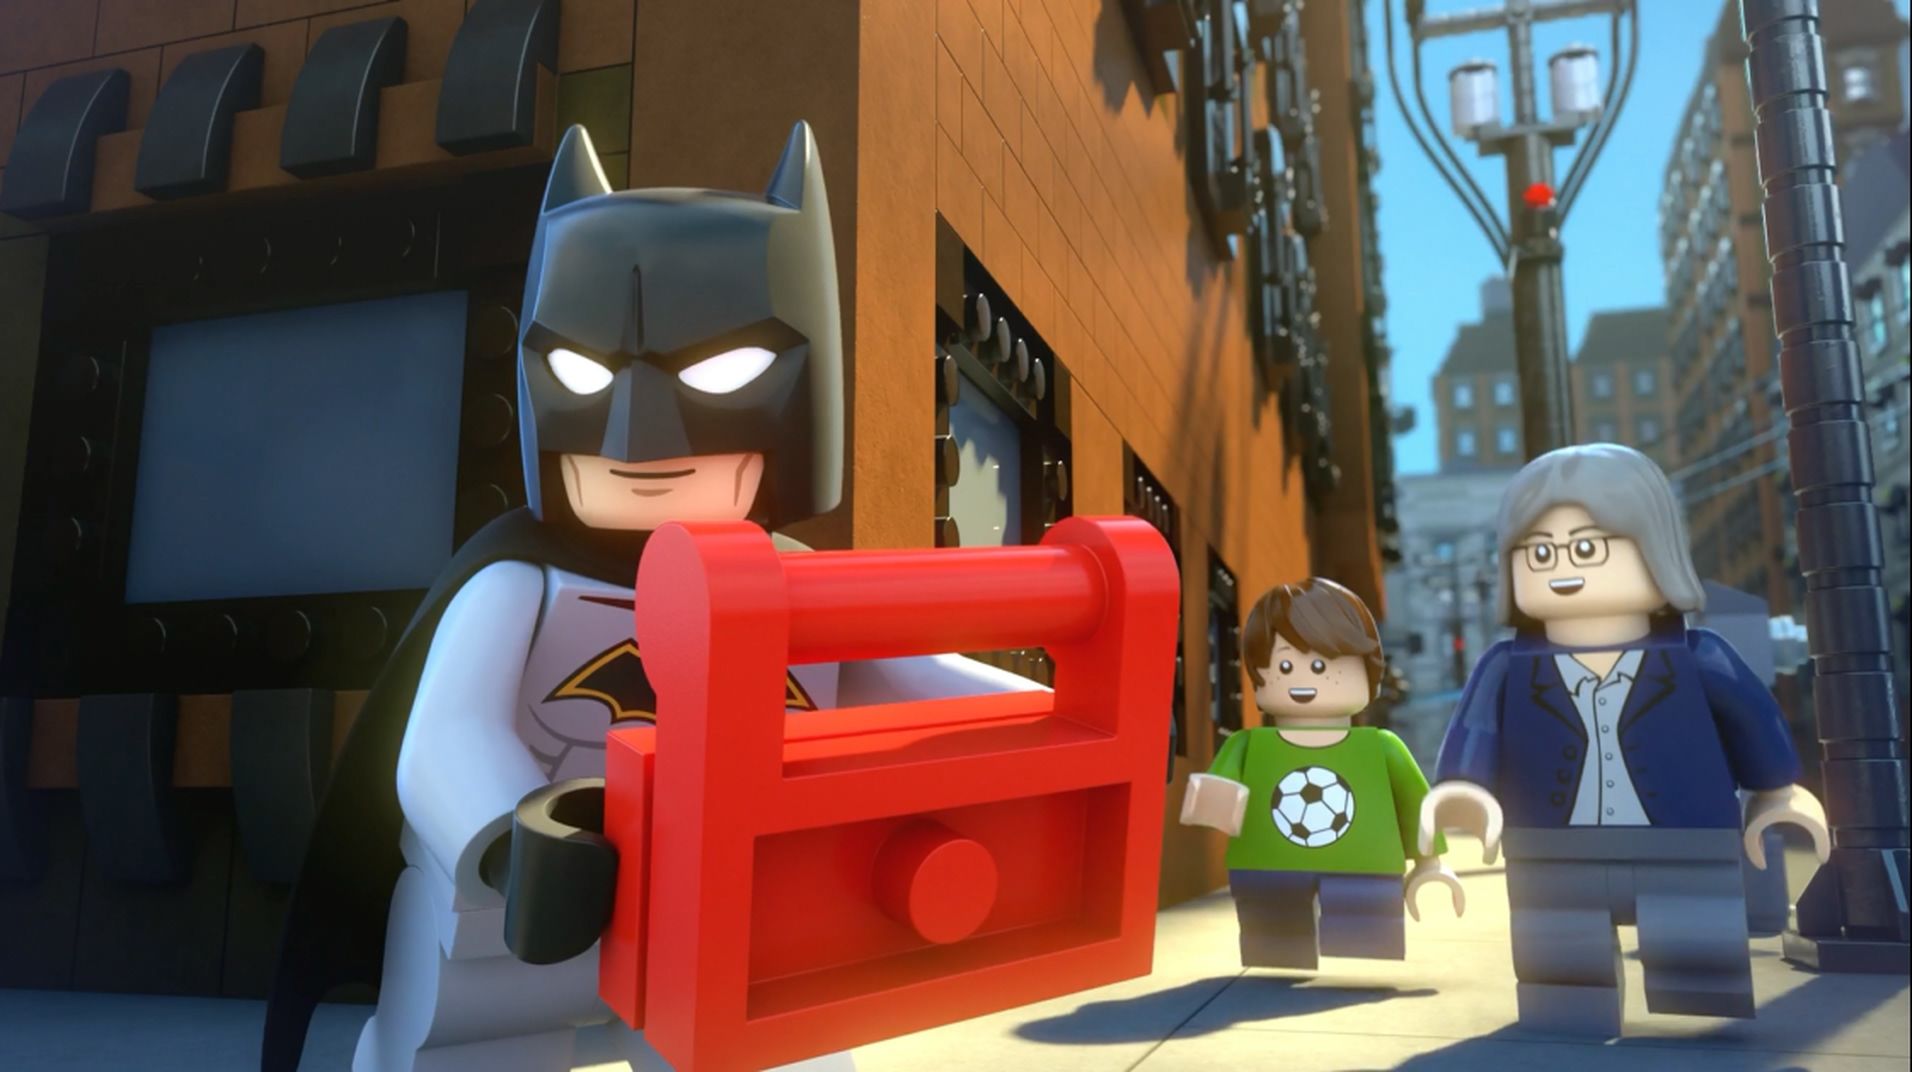 LEGO DC: Batman: Family Matters - Rotten Tomatoes